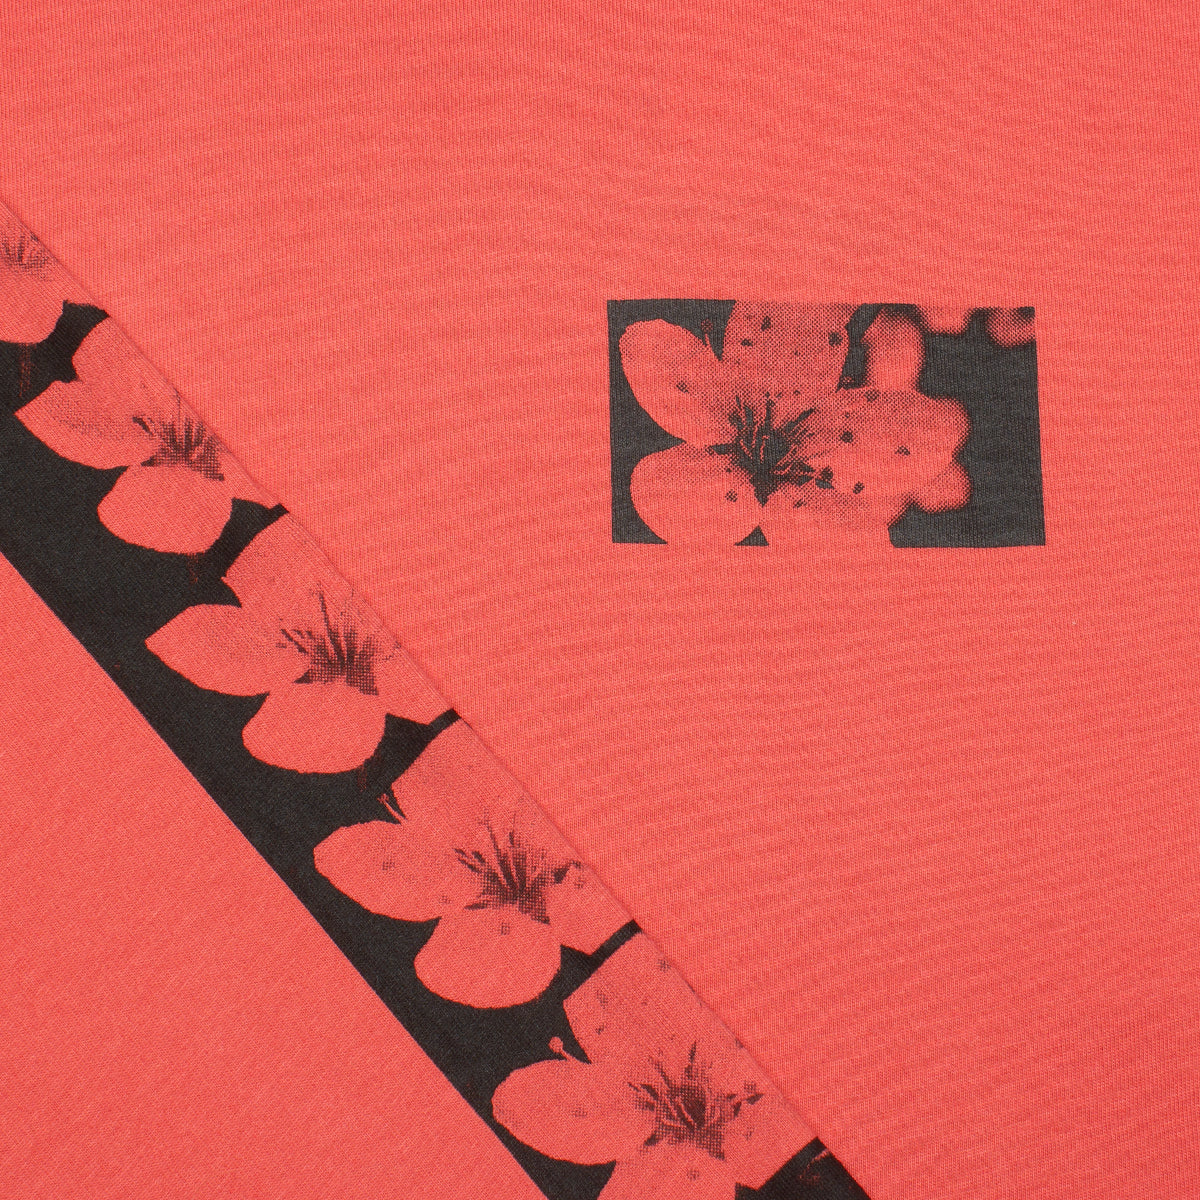 Nike SB Blossom L/S T-Shirt Style # DX9471-655 Color : Adobe